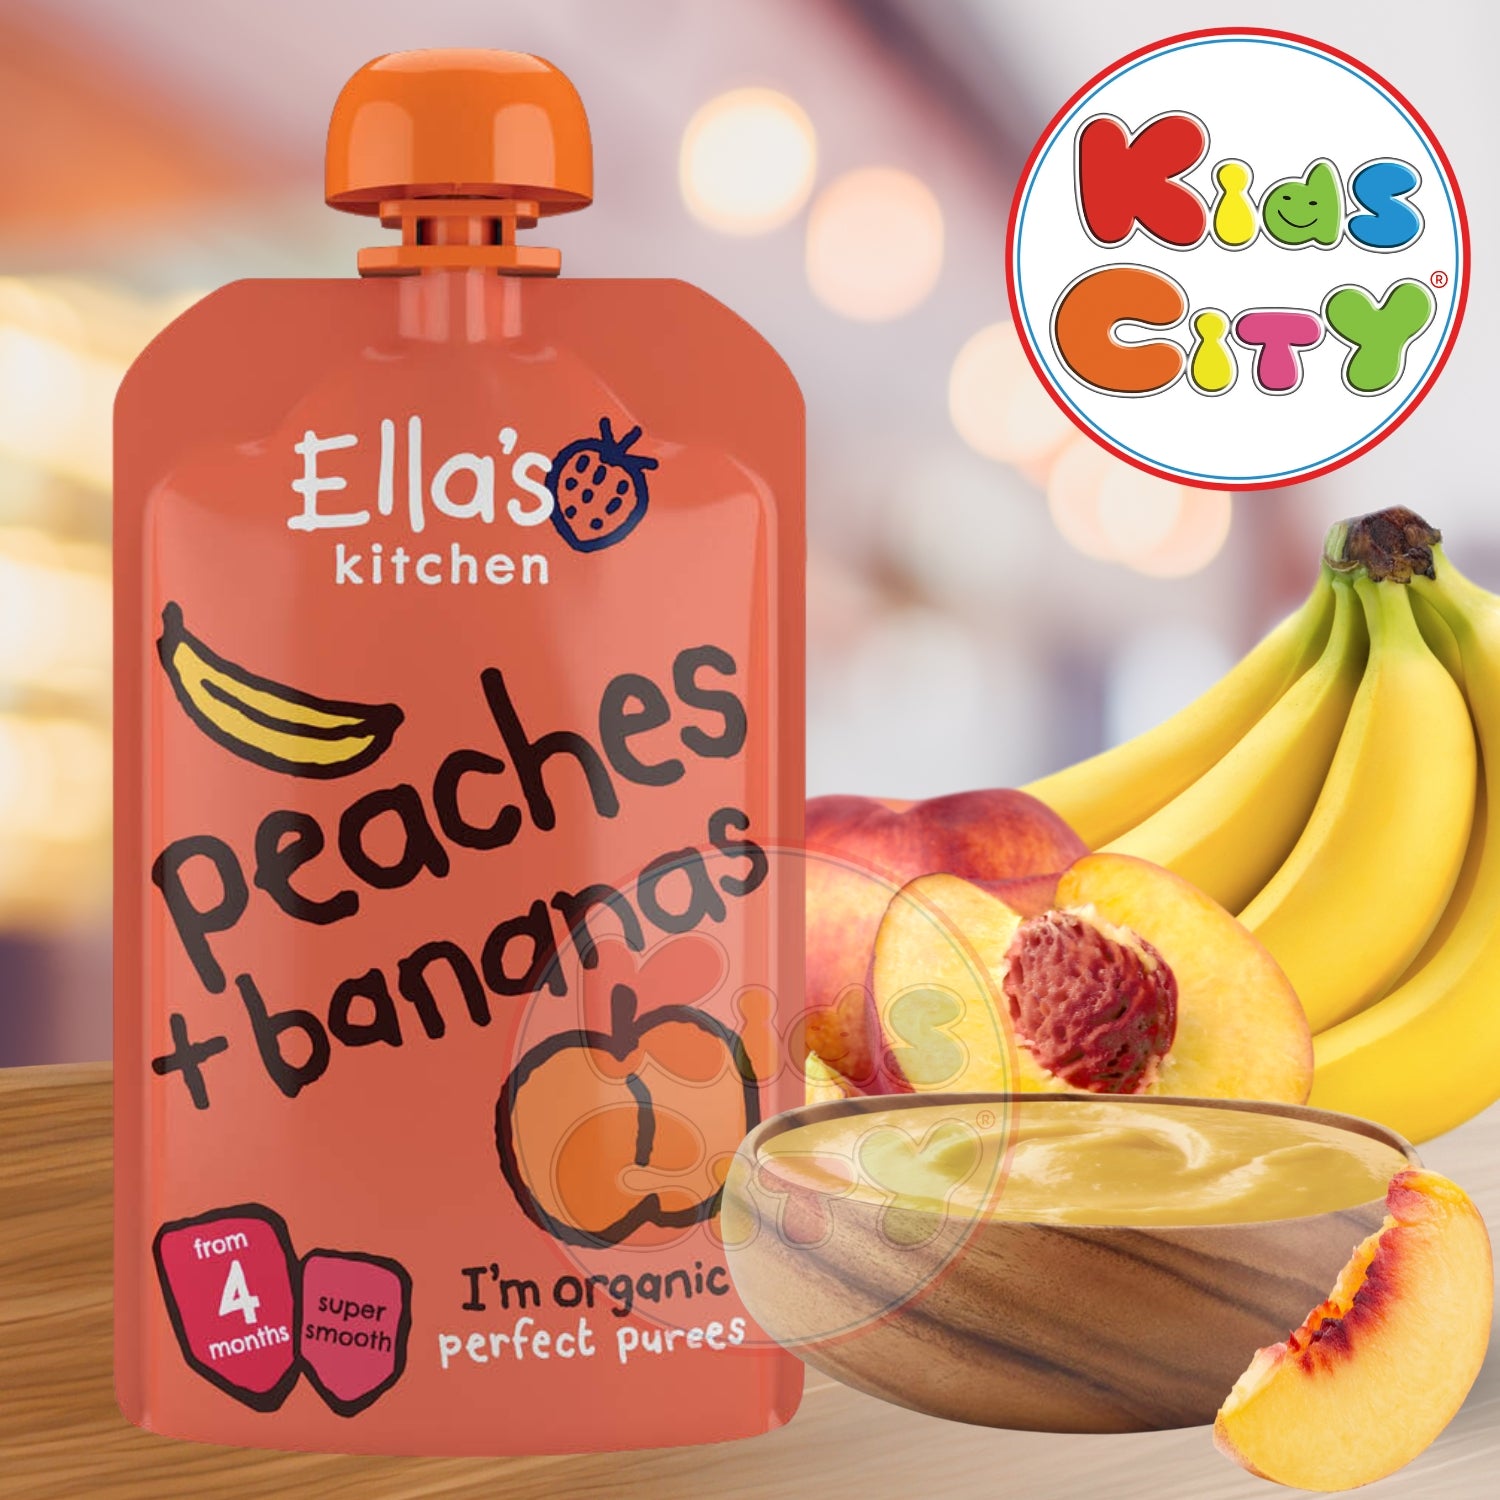 Ellas Kitchen Peaches + Bananas - 120g